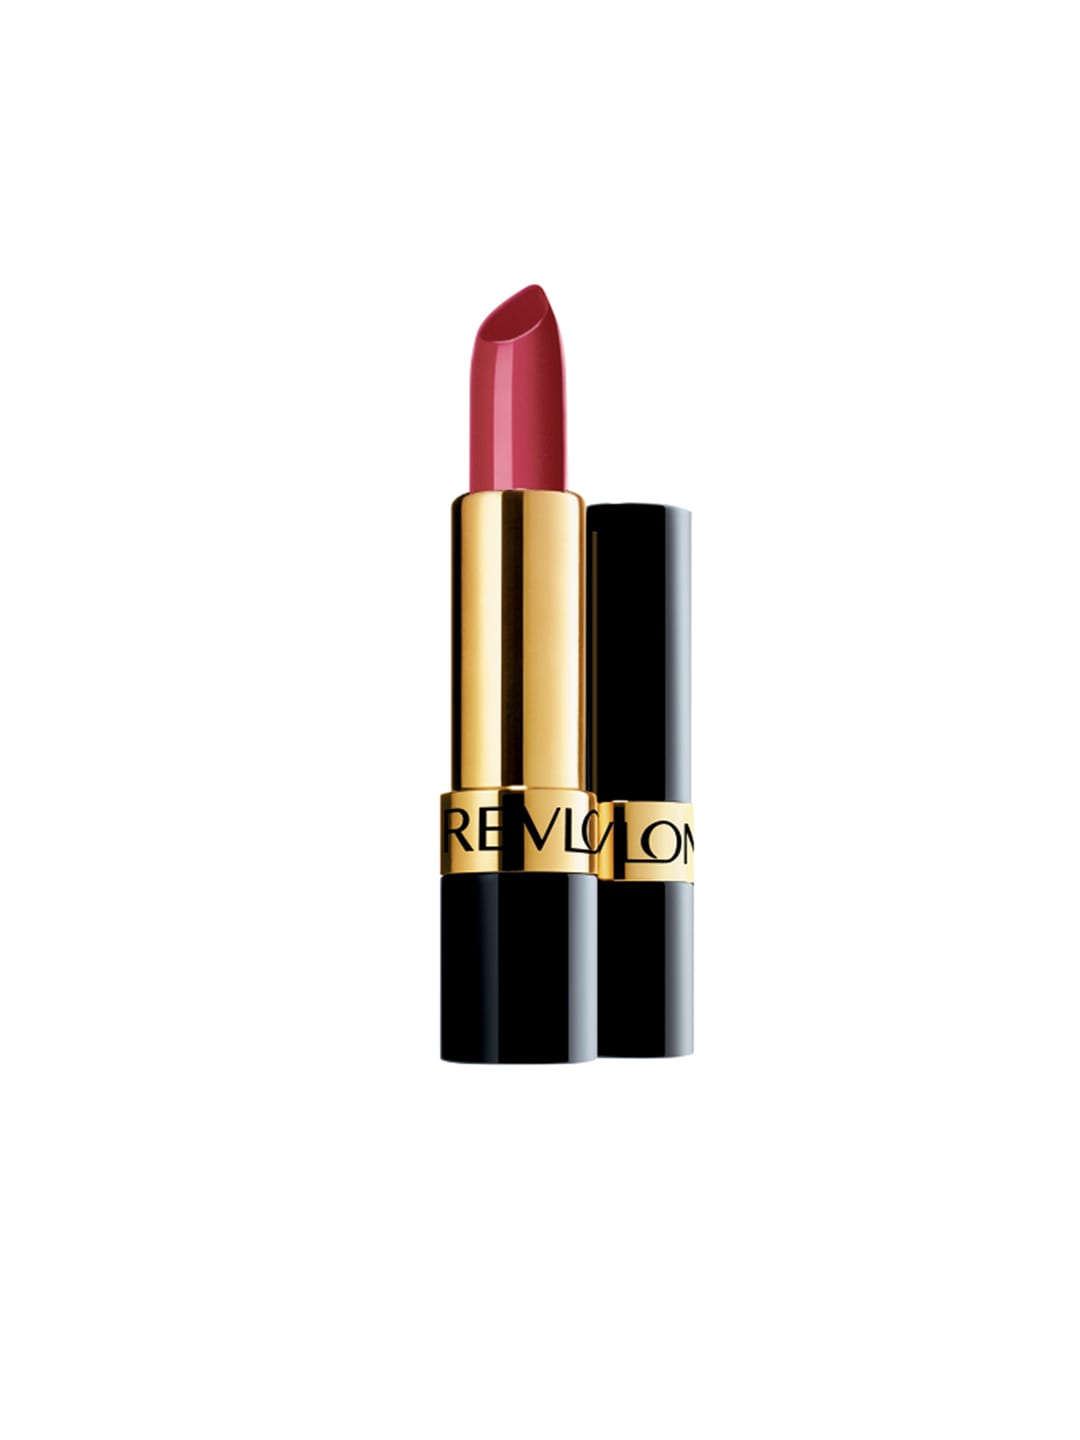 Revlon super lustrous lipstick ** choose your shade ** 4.2g (121761837247): купить на ebay, цена, заказать, фото, отзывы.